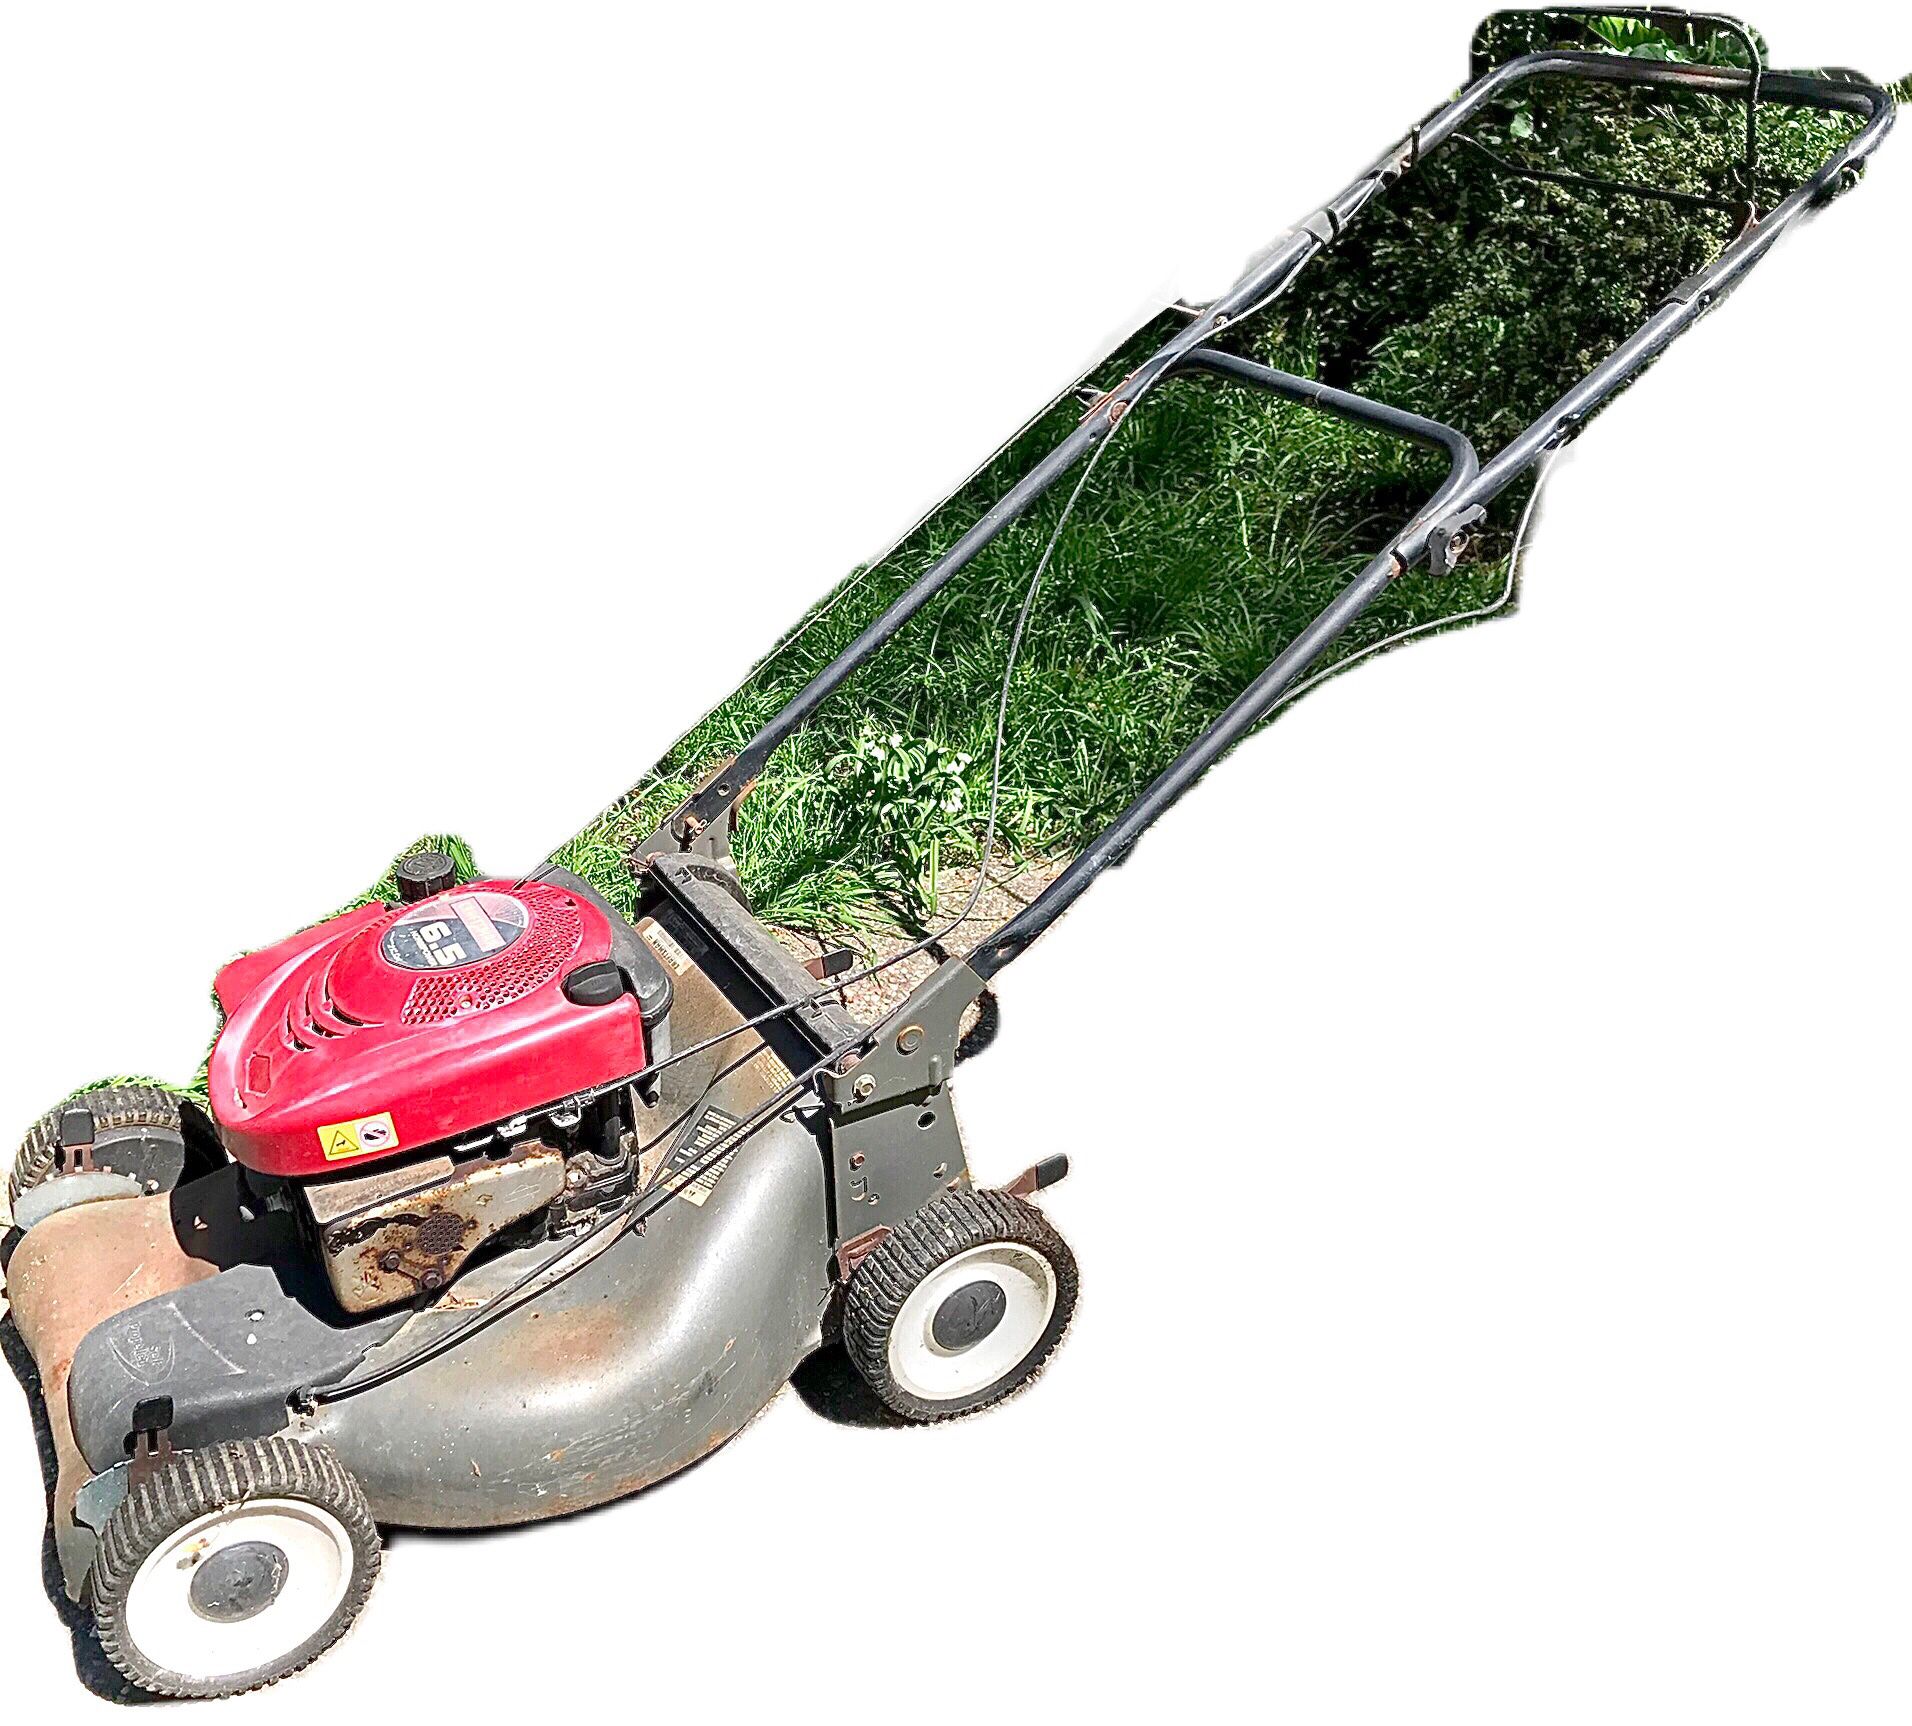 Craftsman Lawn Mower